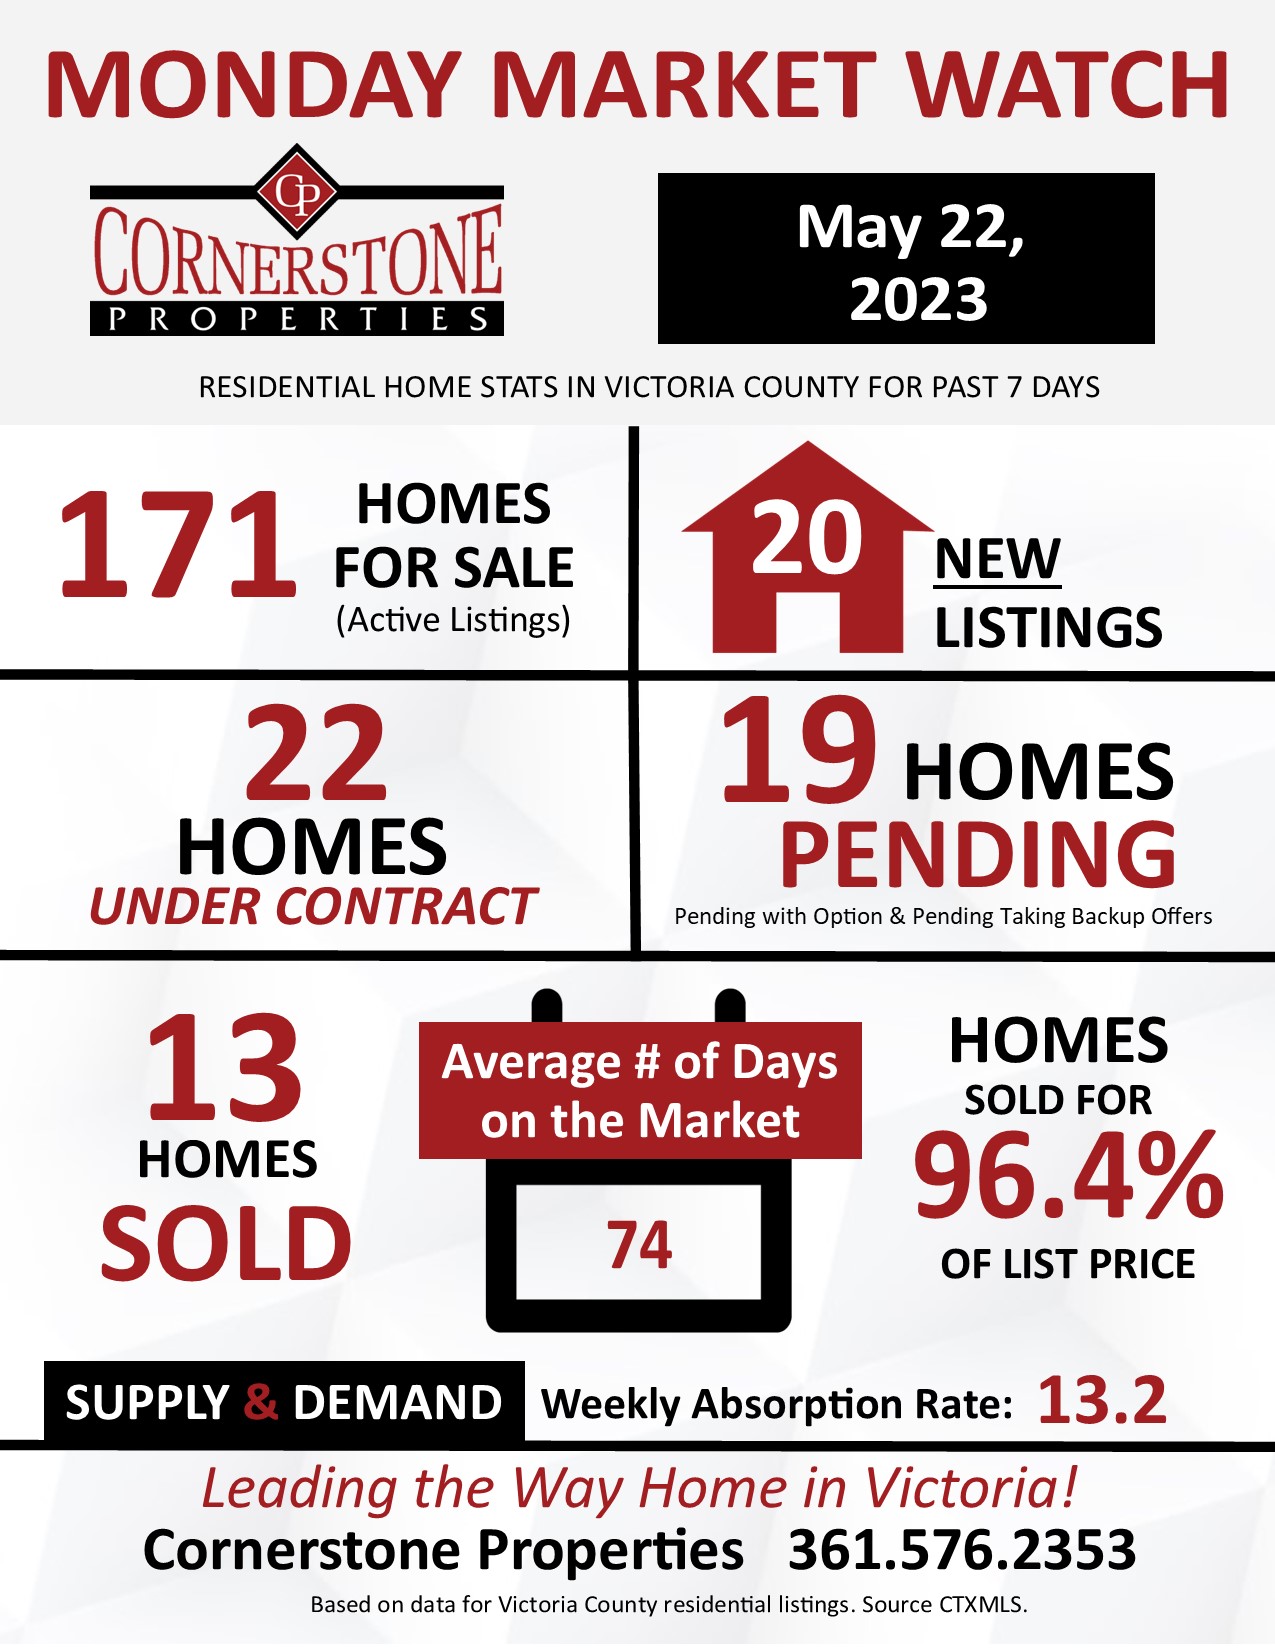 Home Sales in Victoria